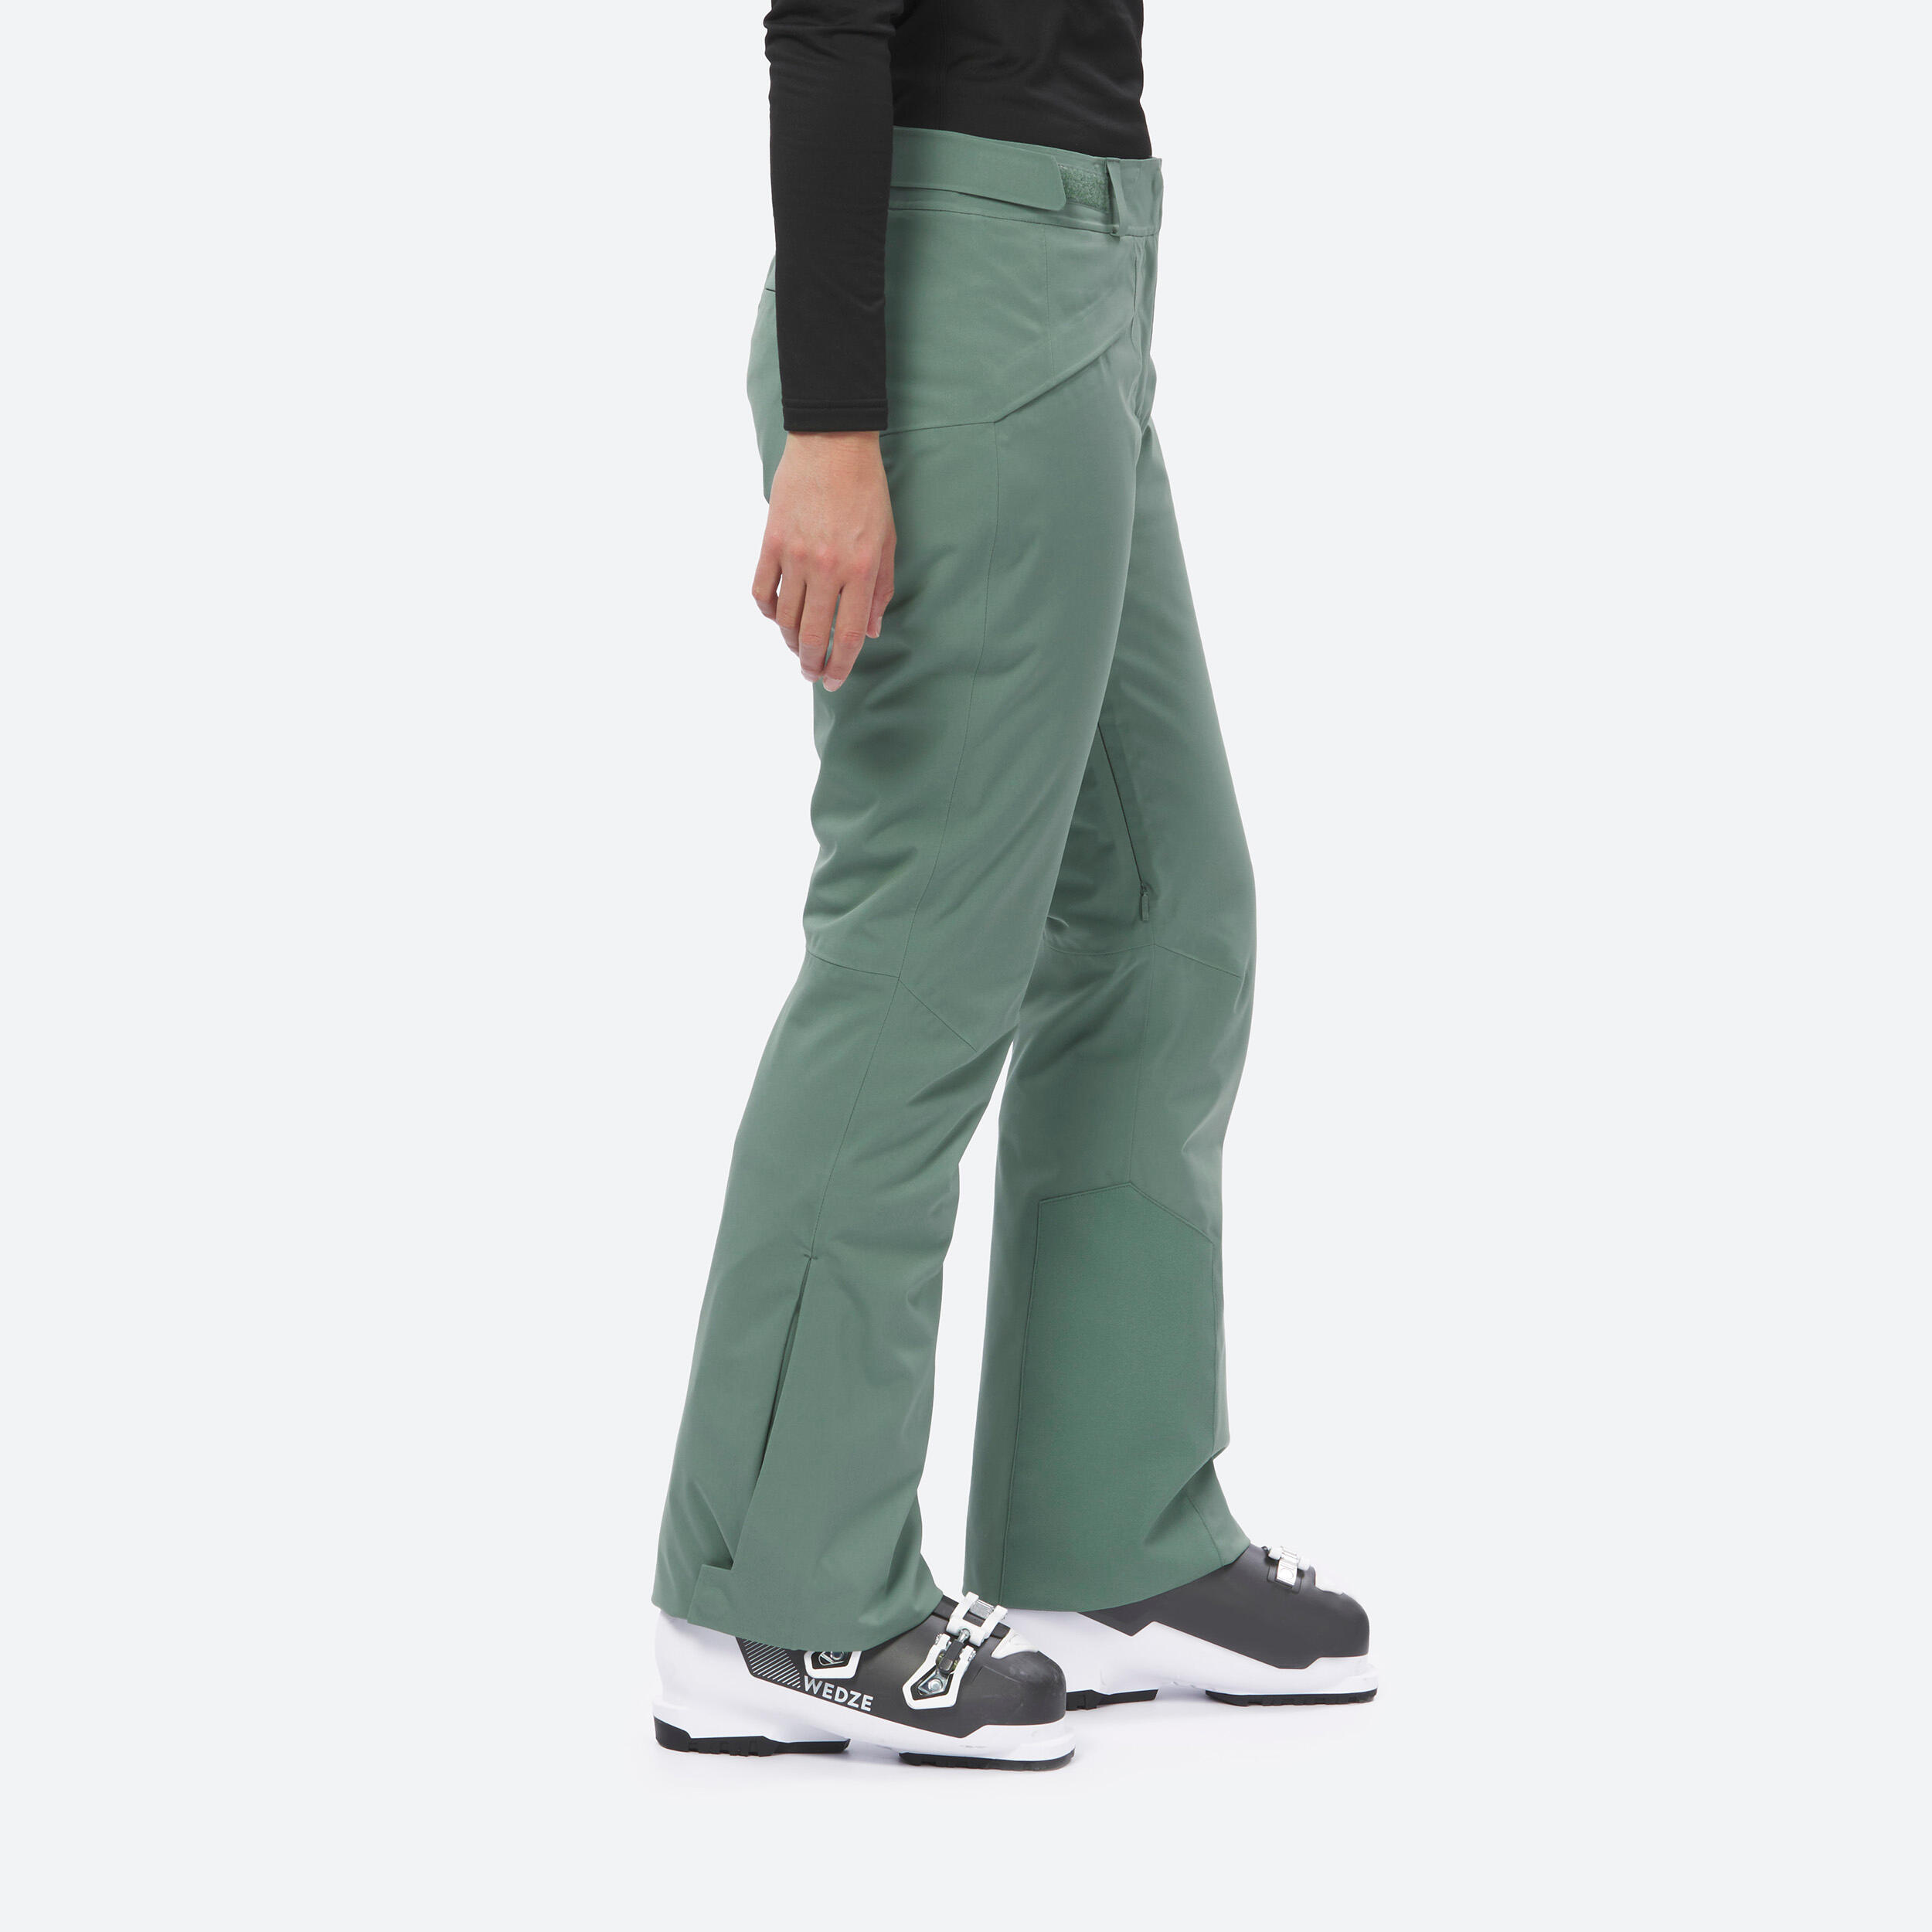 Women's  Warm Ski Trousers 580 - Green 4/11